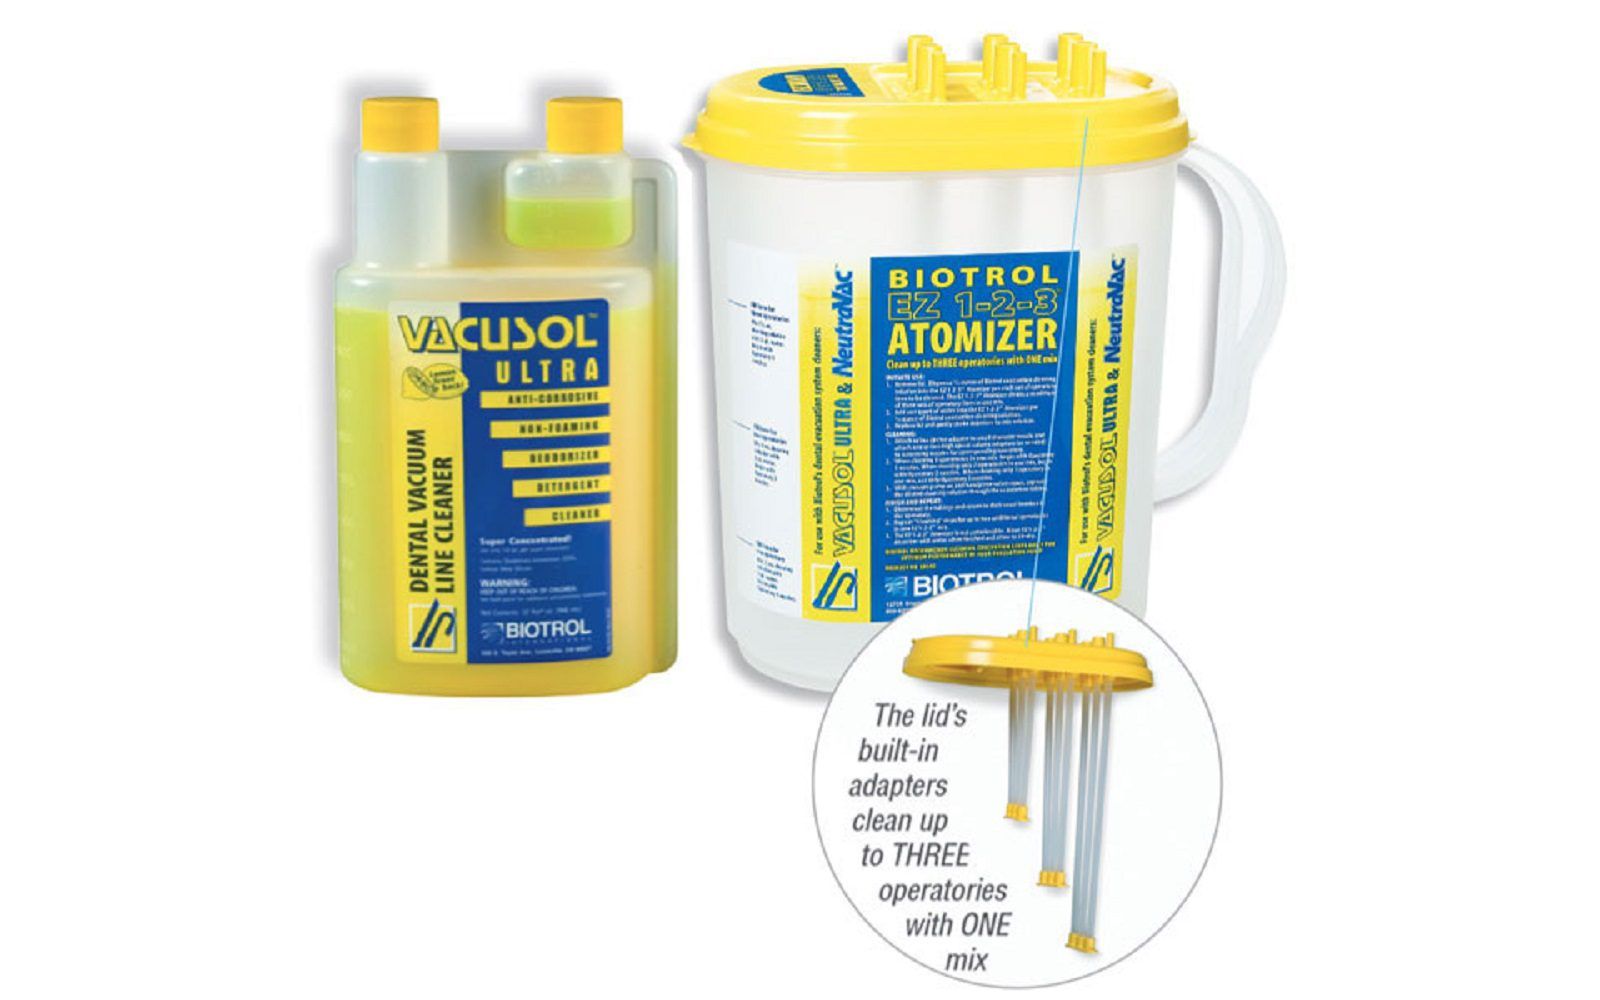 Vacusol ultra dental vacuum line cleaner. Starter kit: 1 quart (32 oz) bottle